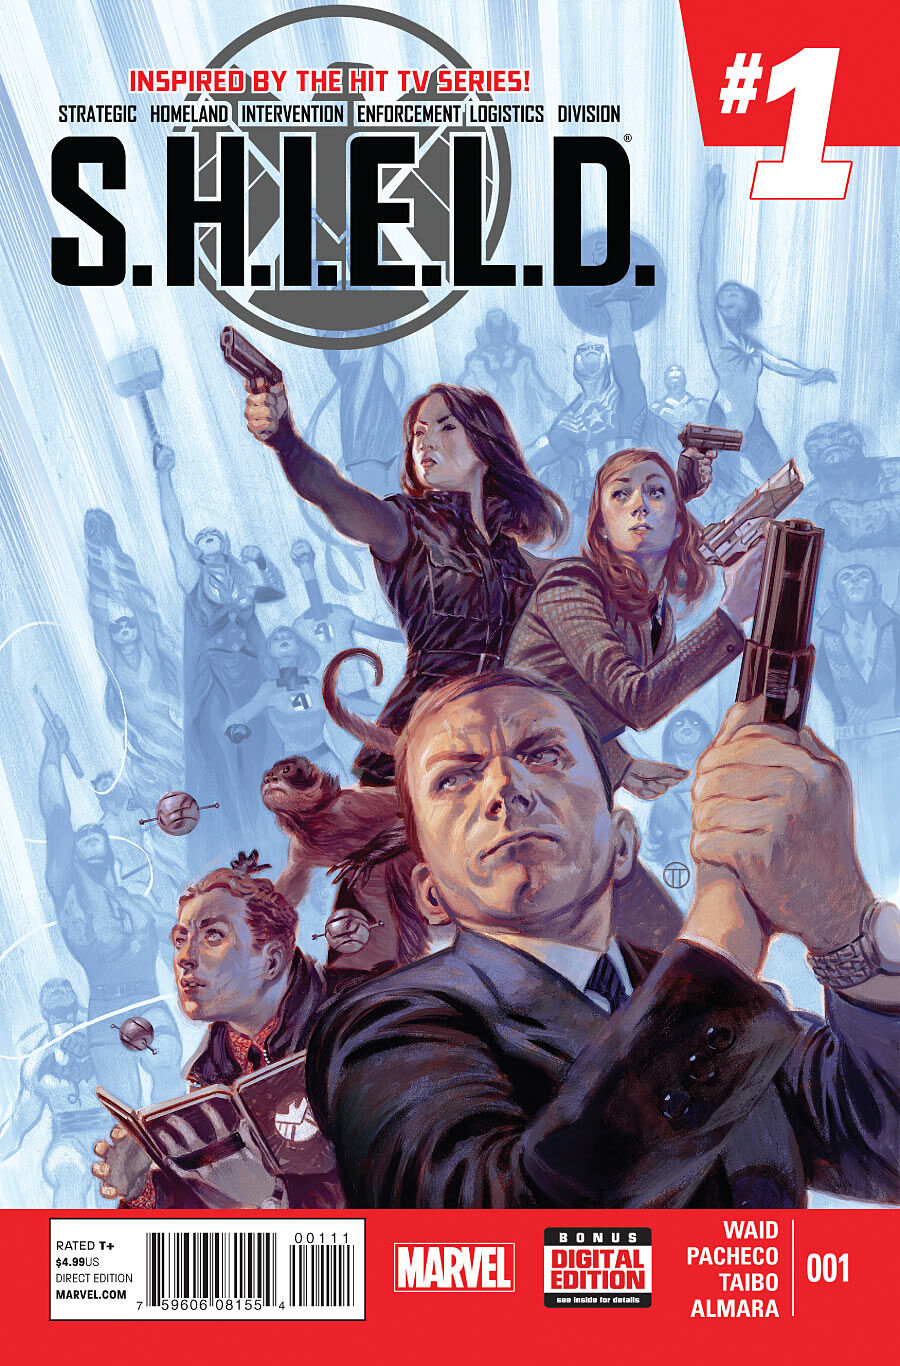 S.H.I.E.L.D. Volume 3 Bundle Issues 1-12